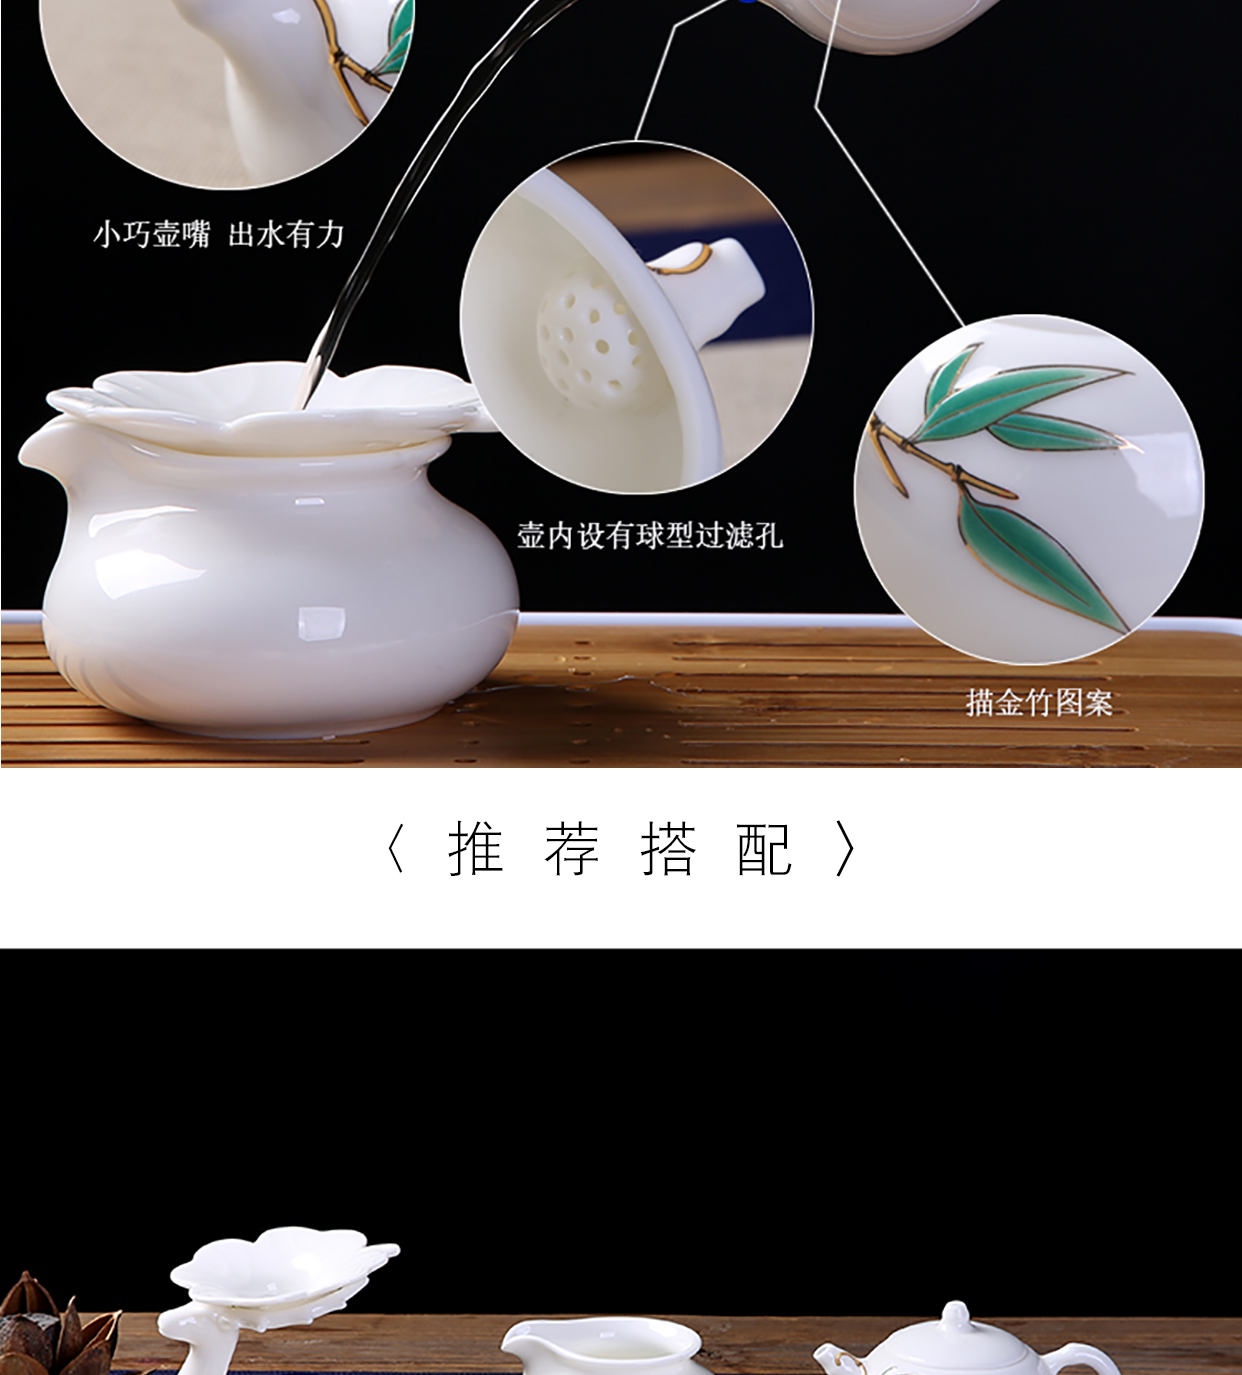 Dehua white porcelain teapot home tea ware Japanese small and pure and fresh filtering heat - resistant ceramic kung fu xi shi single pot of tea